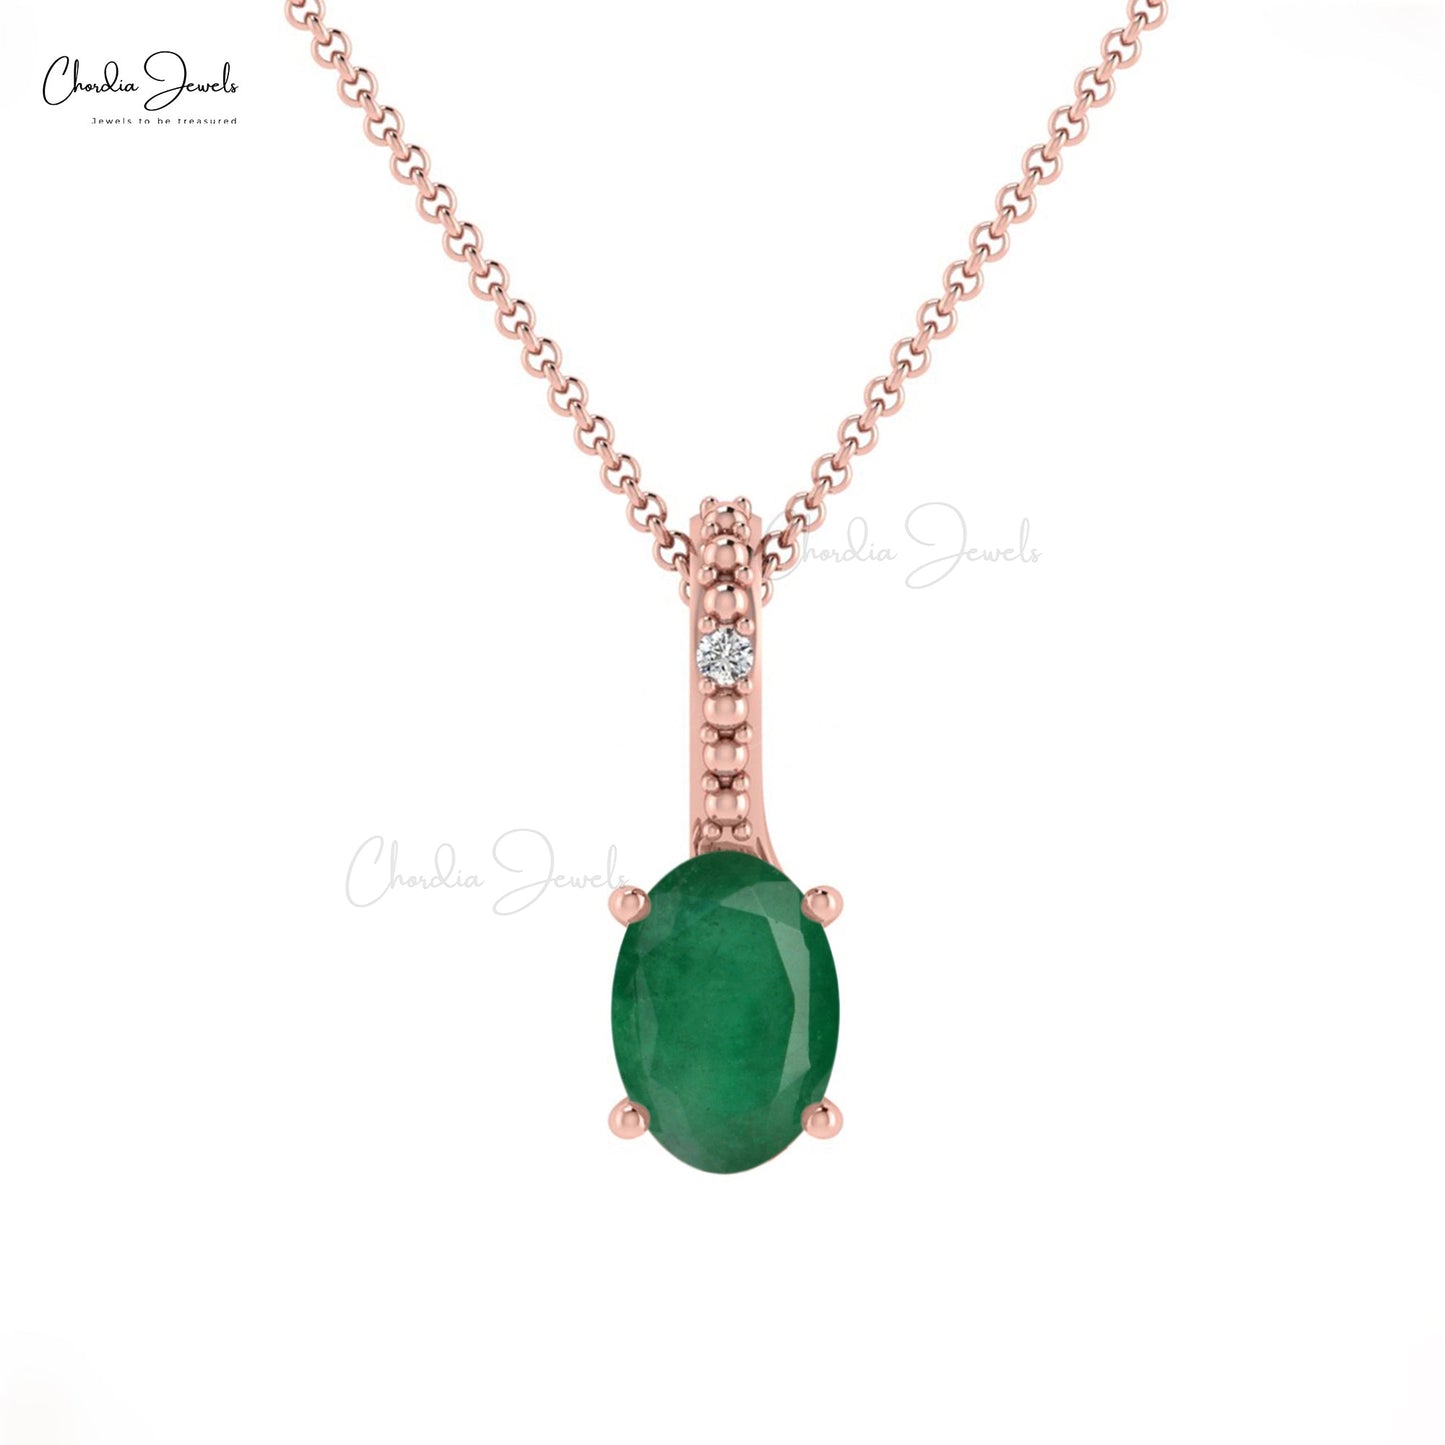 Hidden Bail Locket Pendant With Genuine Emerald & Diamond 14k Solid Gold Solitaire Pendant